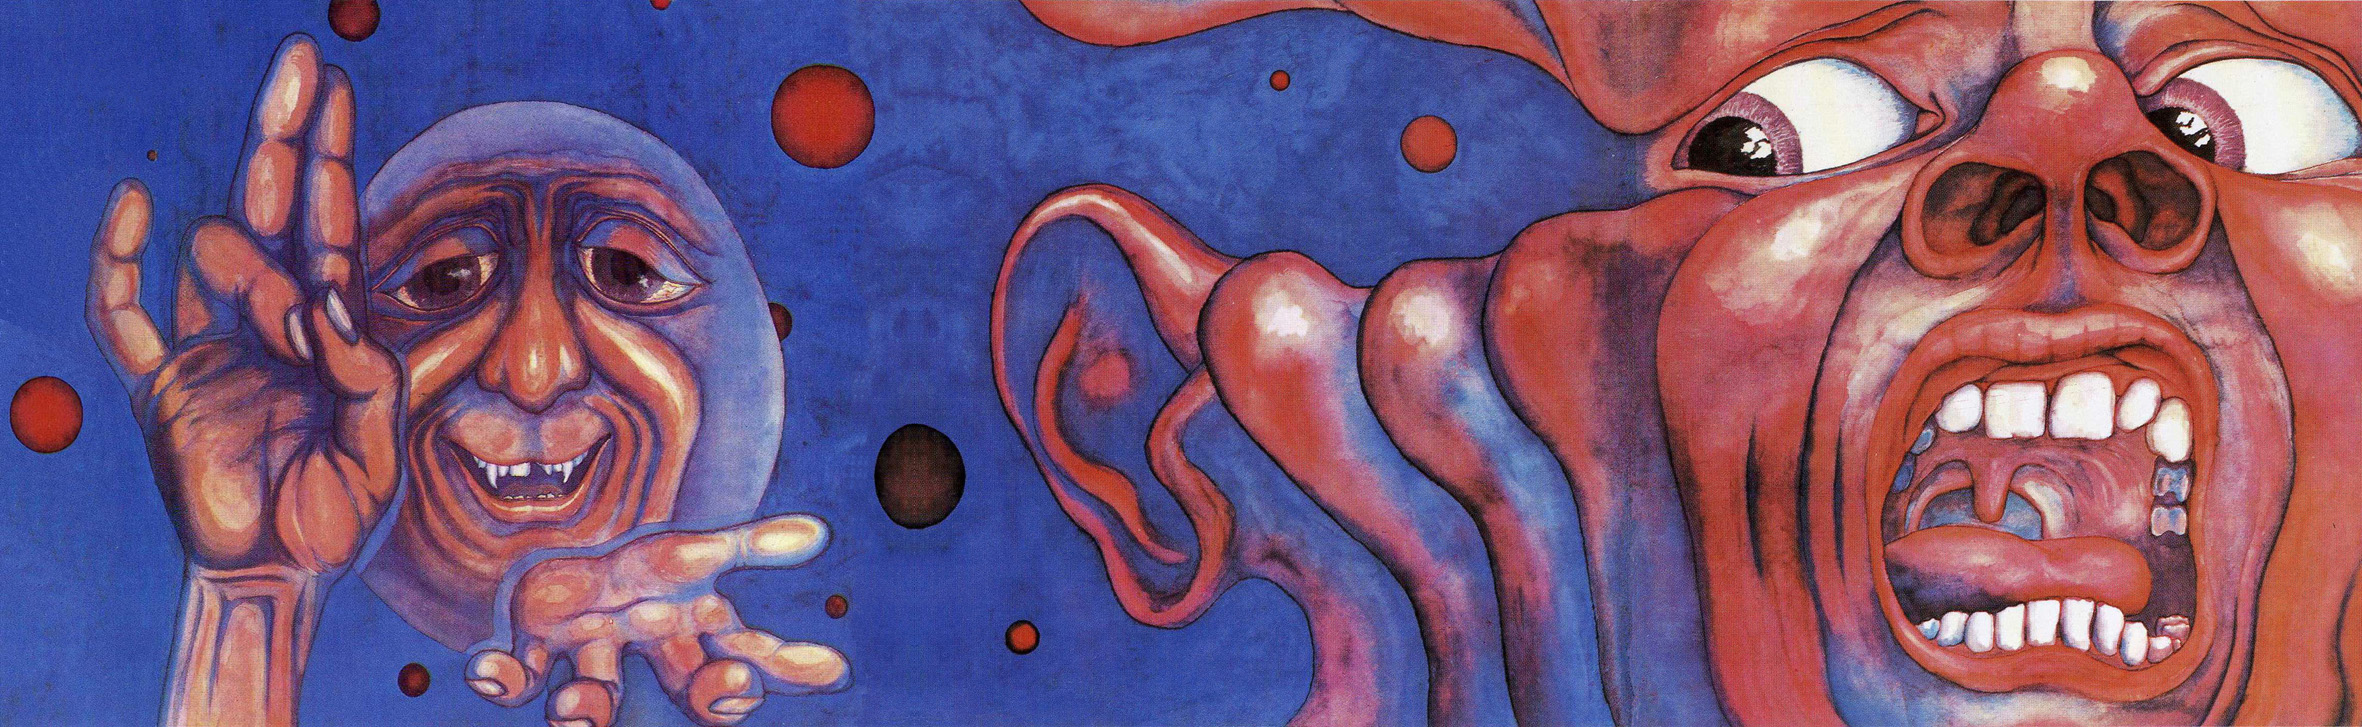 King Crimson HD wallpapers, Desktop wallpaper - most viewed